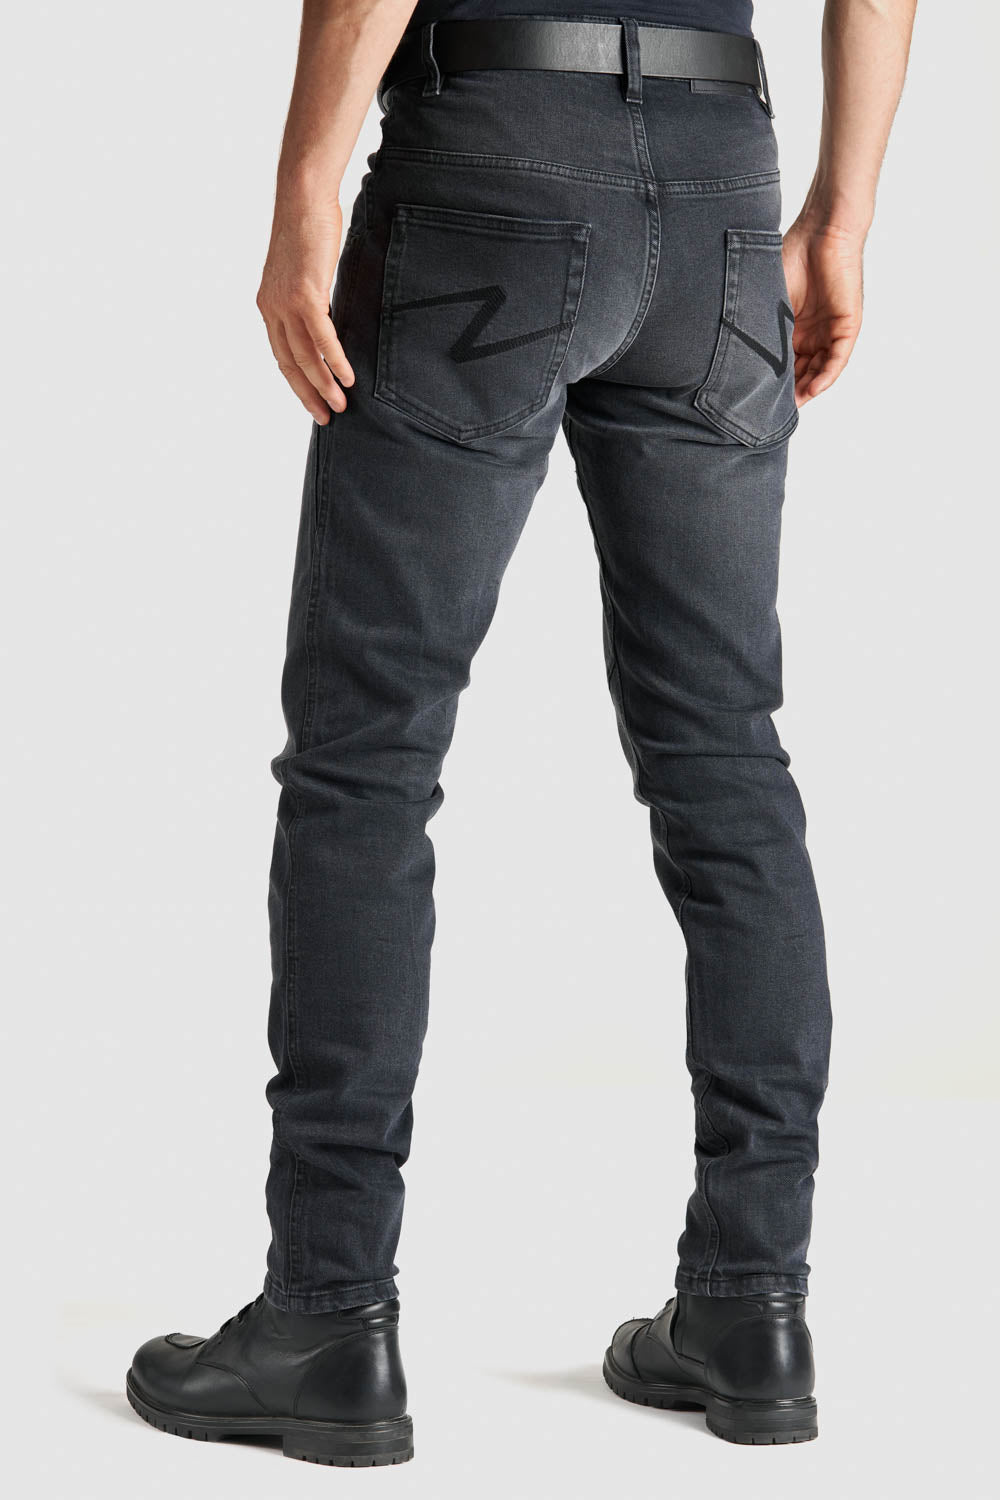 Pando Moto Robby SLIM Black Casual Jeans, Length 32